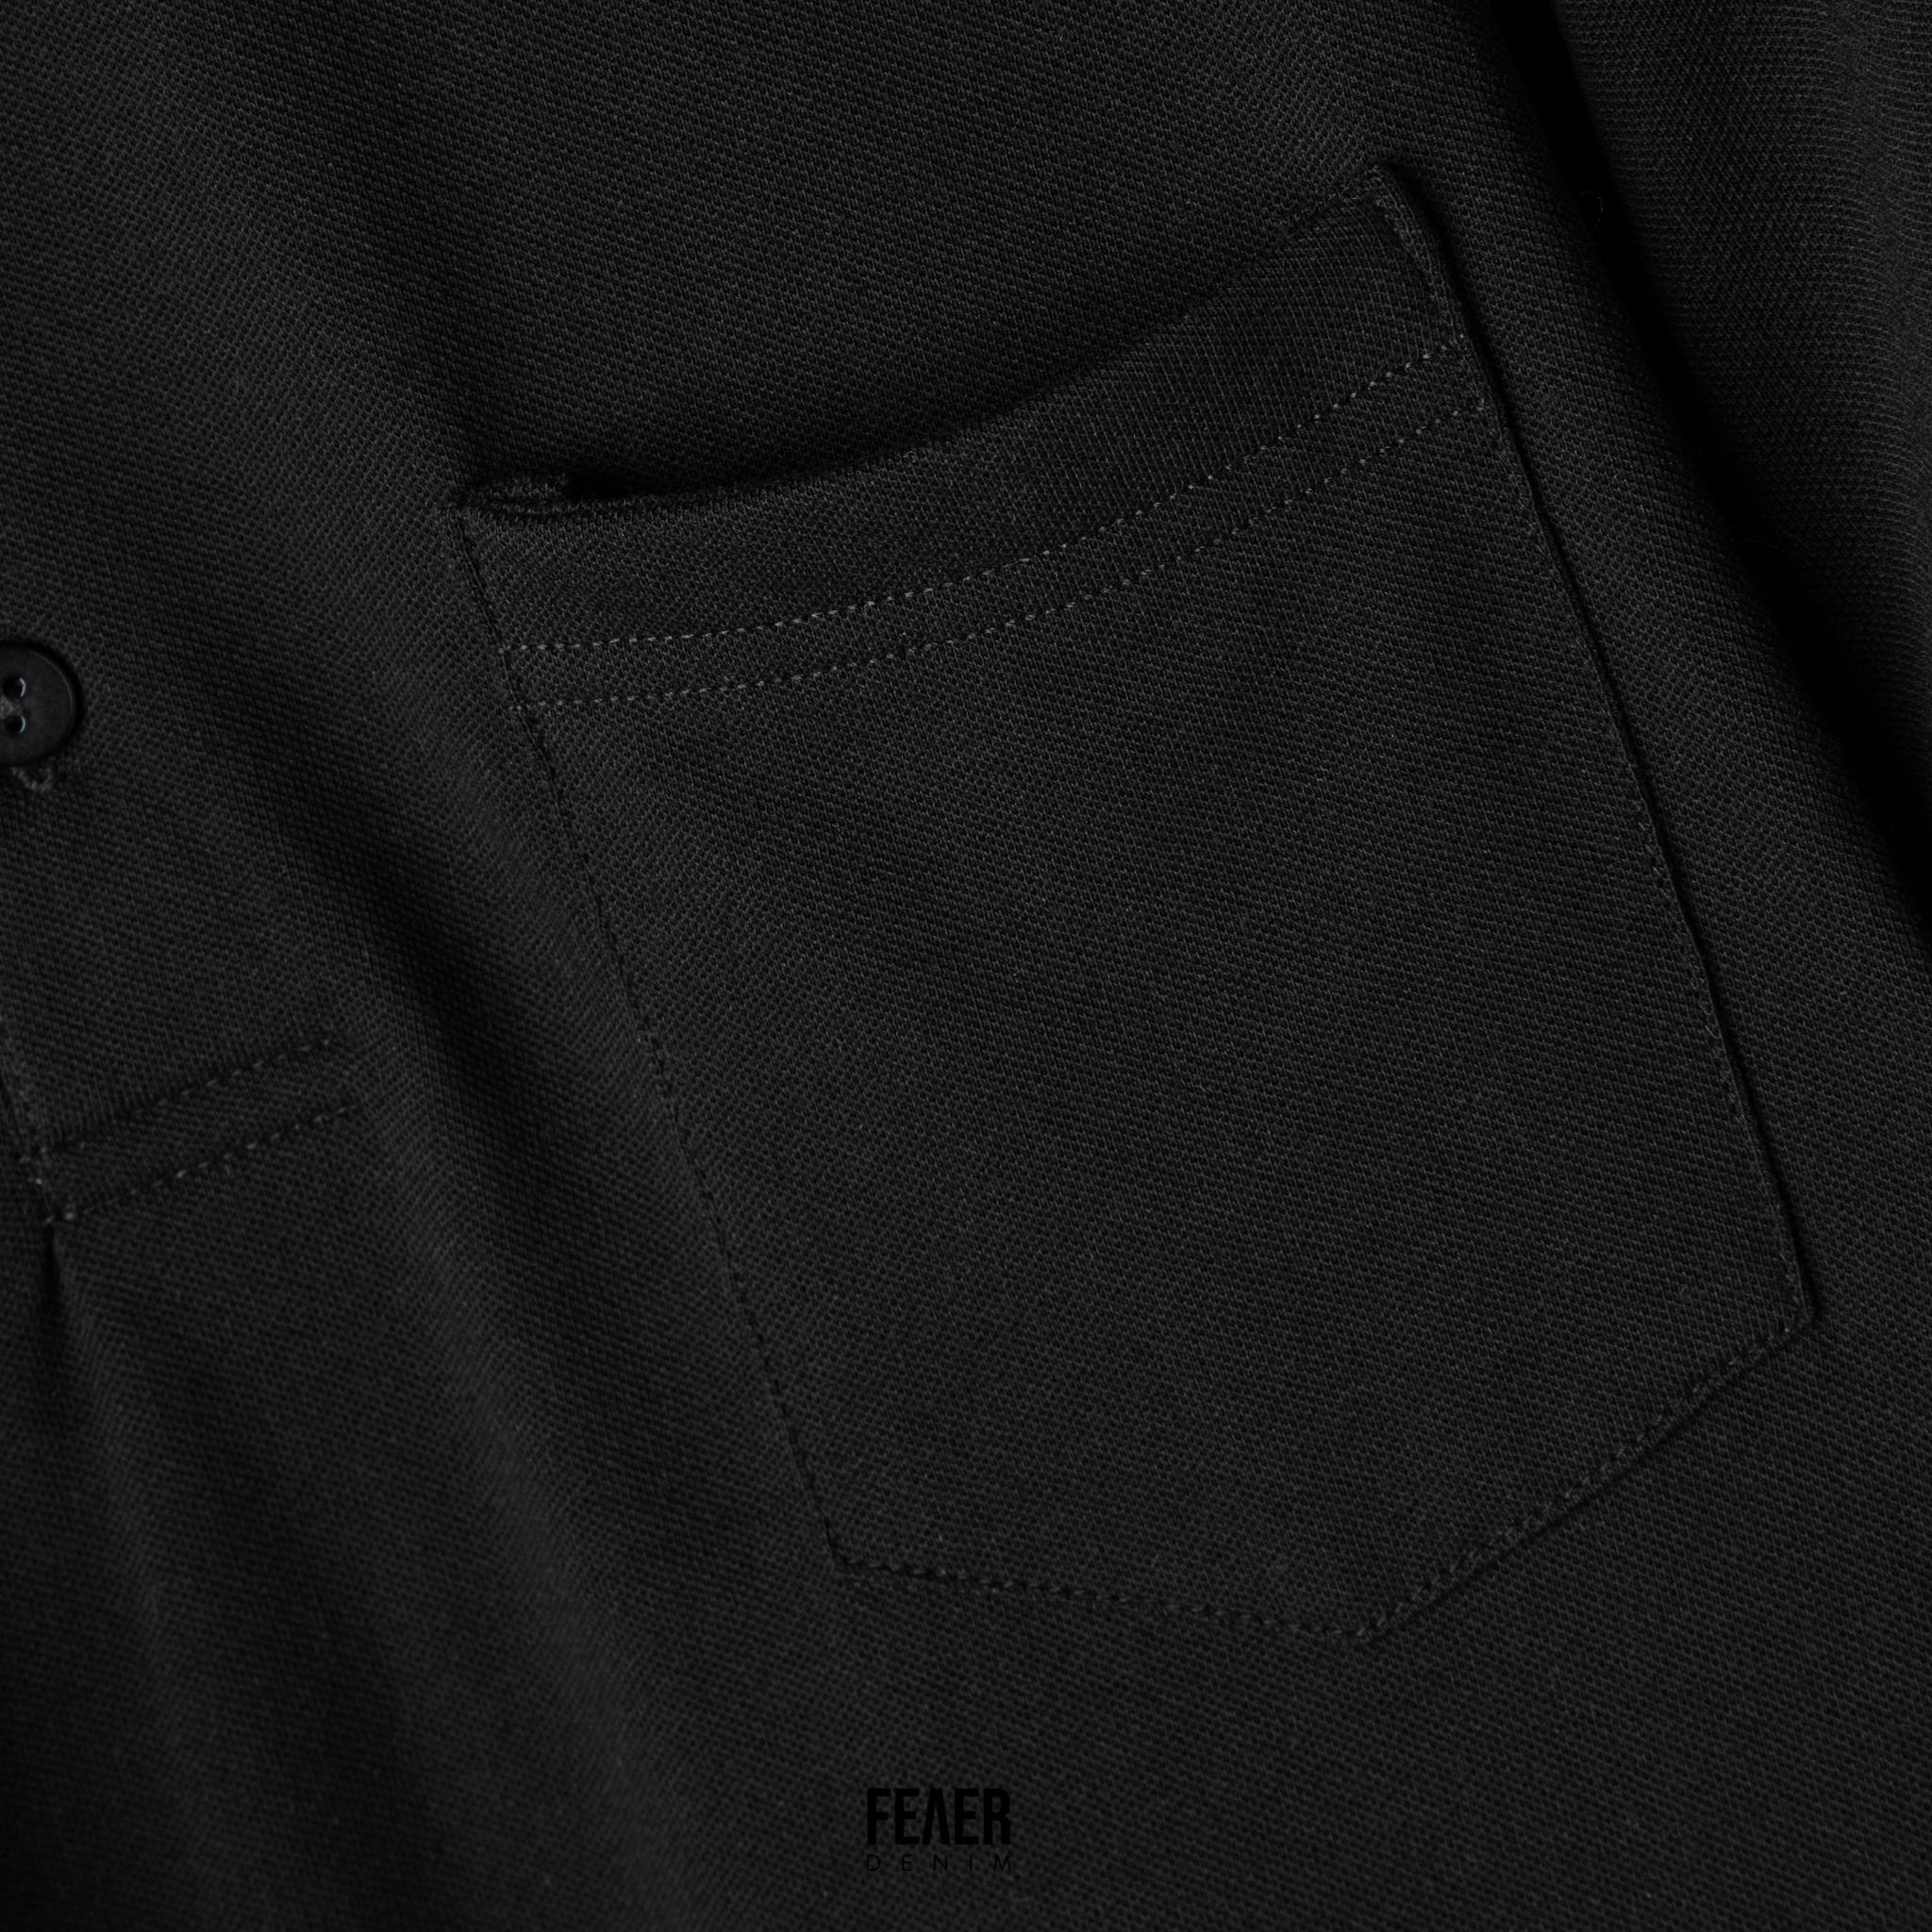 Áo Polo Nam Embroidered Collar FEAER DENIM Form chuẩn, Chất Cotton 100%, Họa Tiết Trẻ Trung